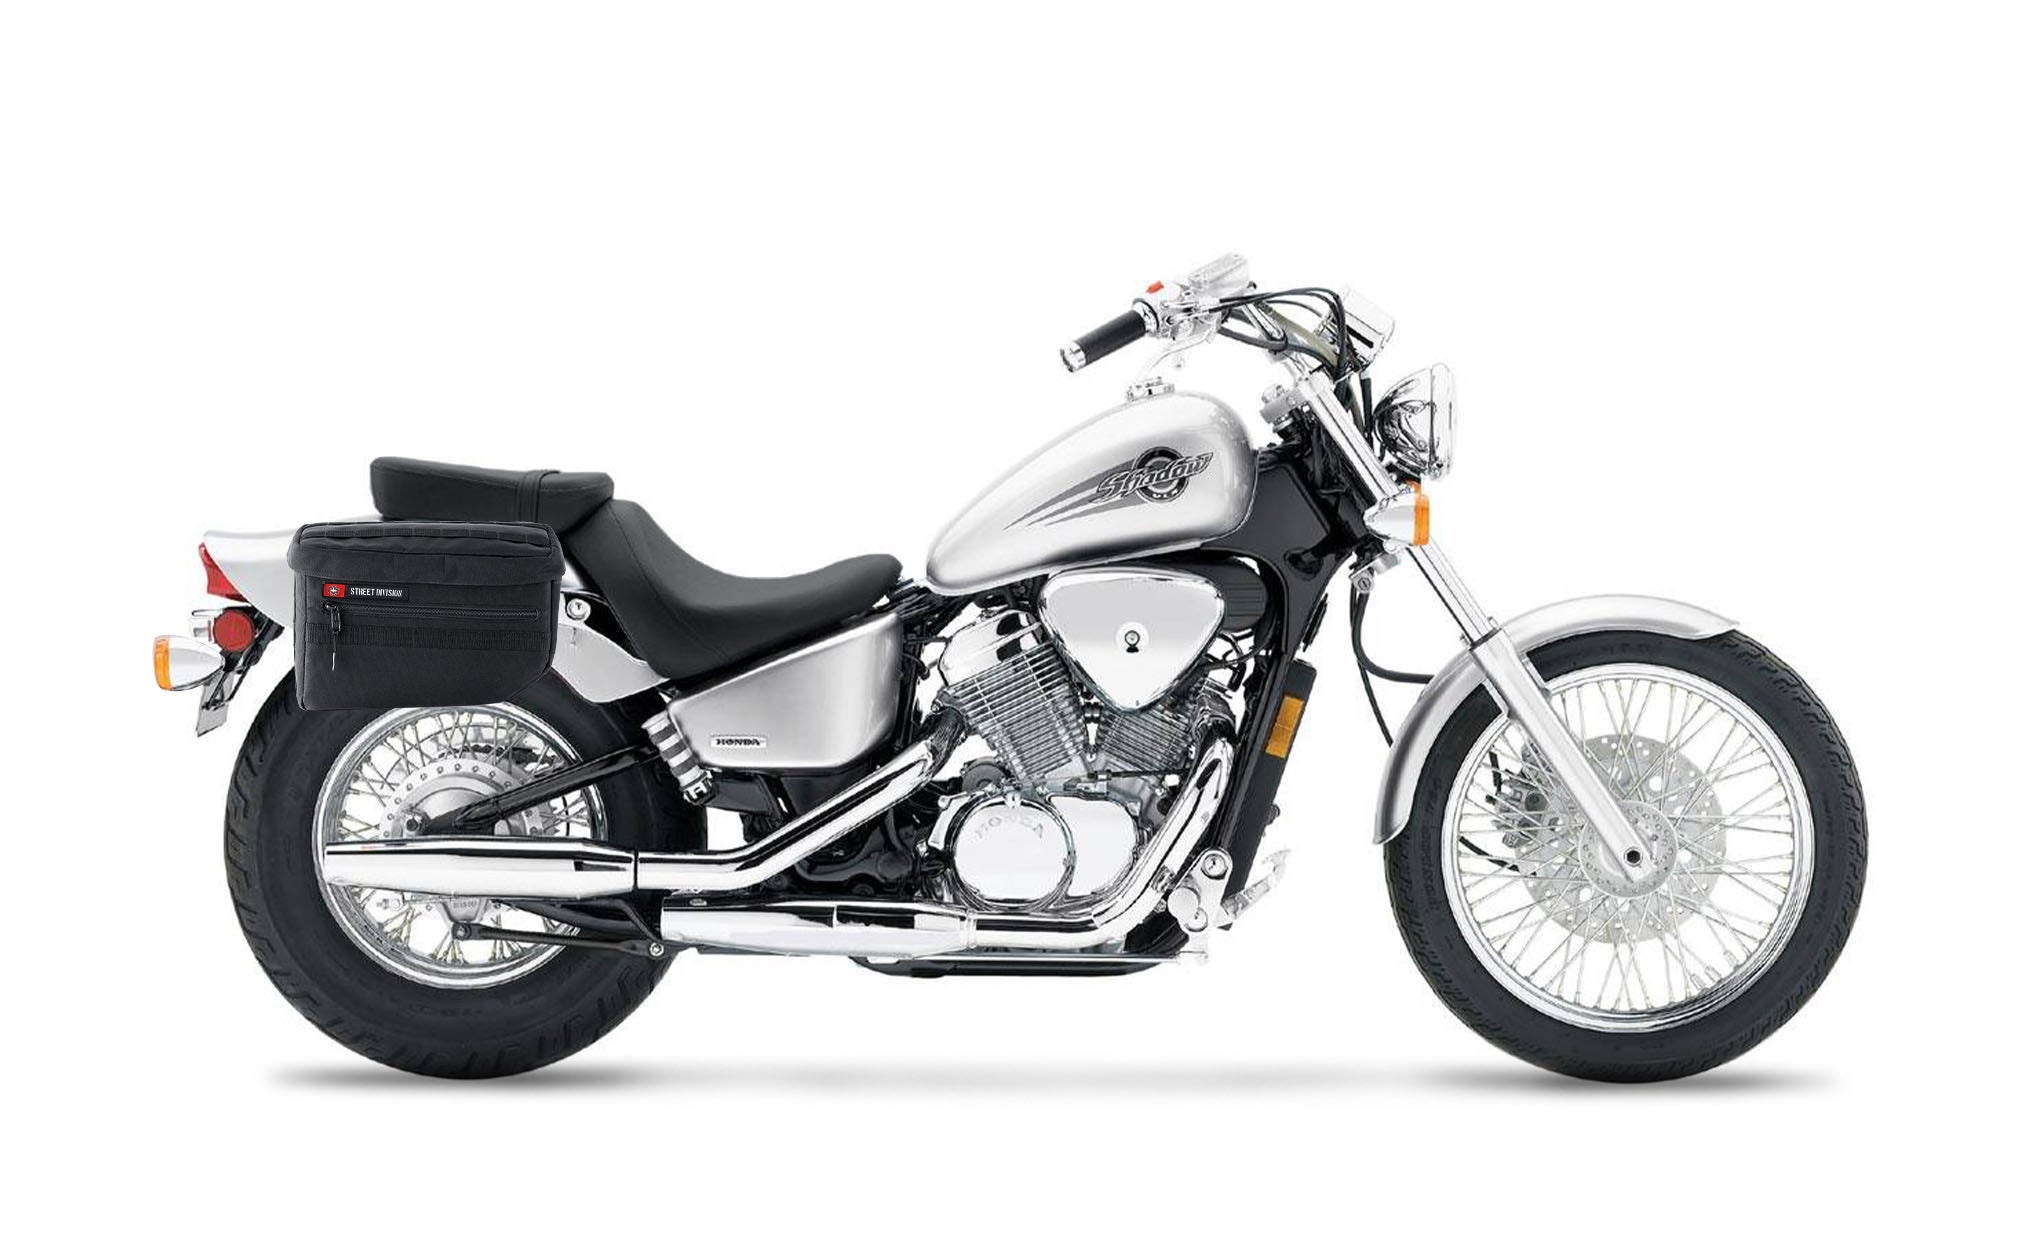 Viking Patriot Large Honda Shadow 600 Vlx Motorcycle Throw Over Saddlebags on Bike Photo @expand